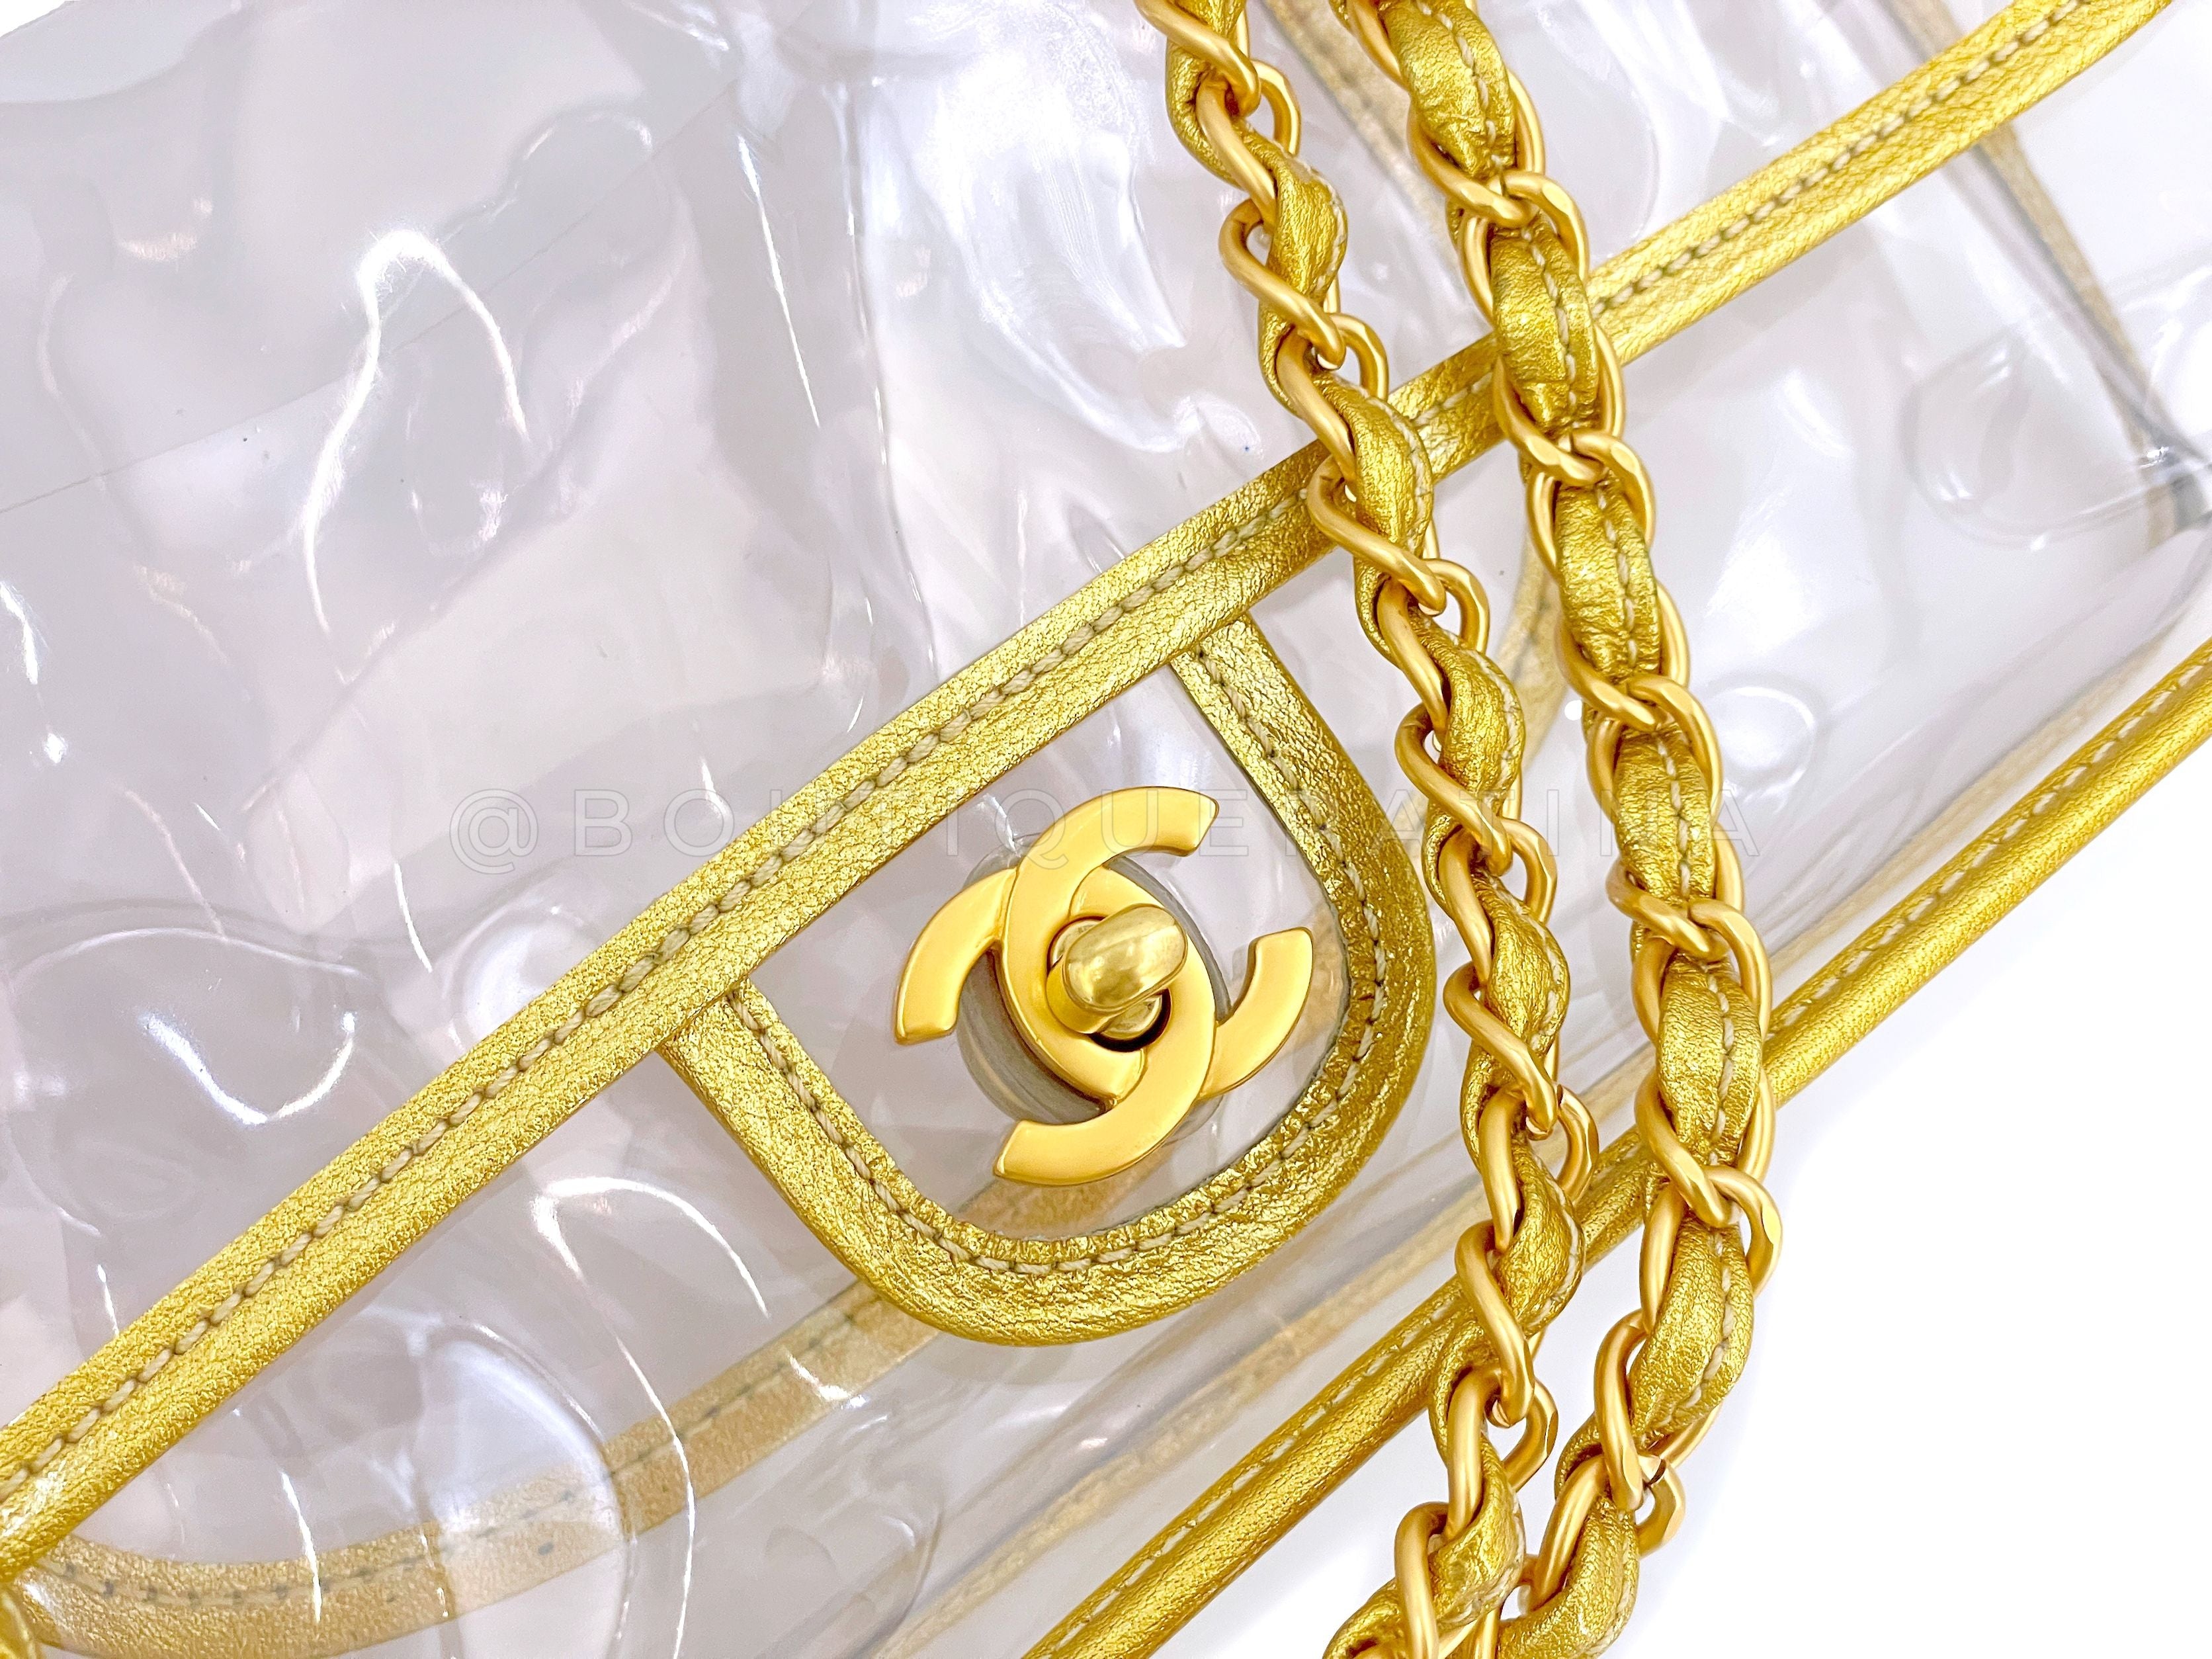 Chanel Vintage Limited Clear PVC Gold Trim Classic Flap Bag GHW